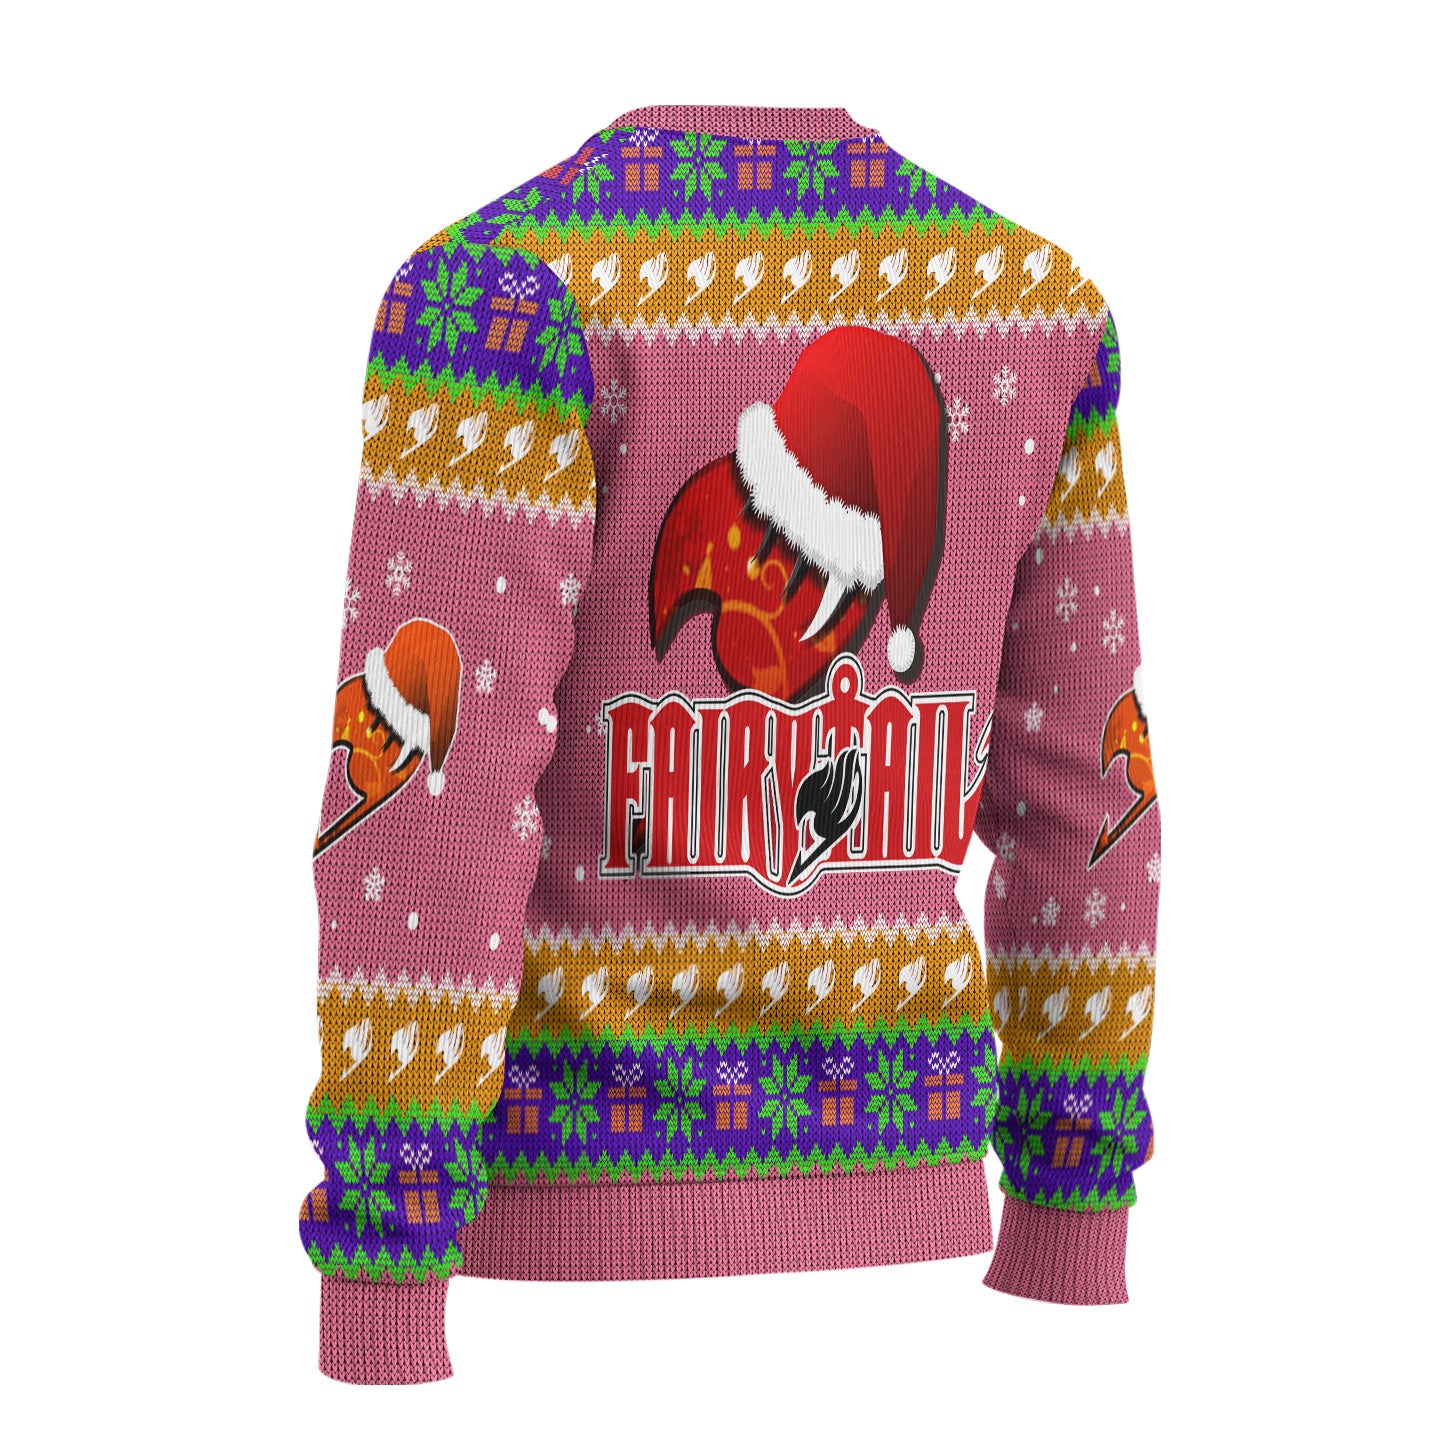 Natsu Dragneel Anime Ugly Christmas Sweater Custom Fairy Tail New Design